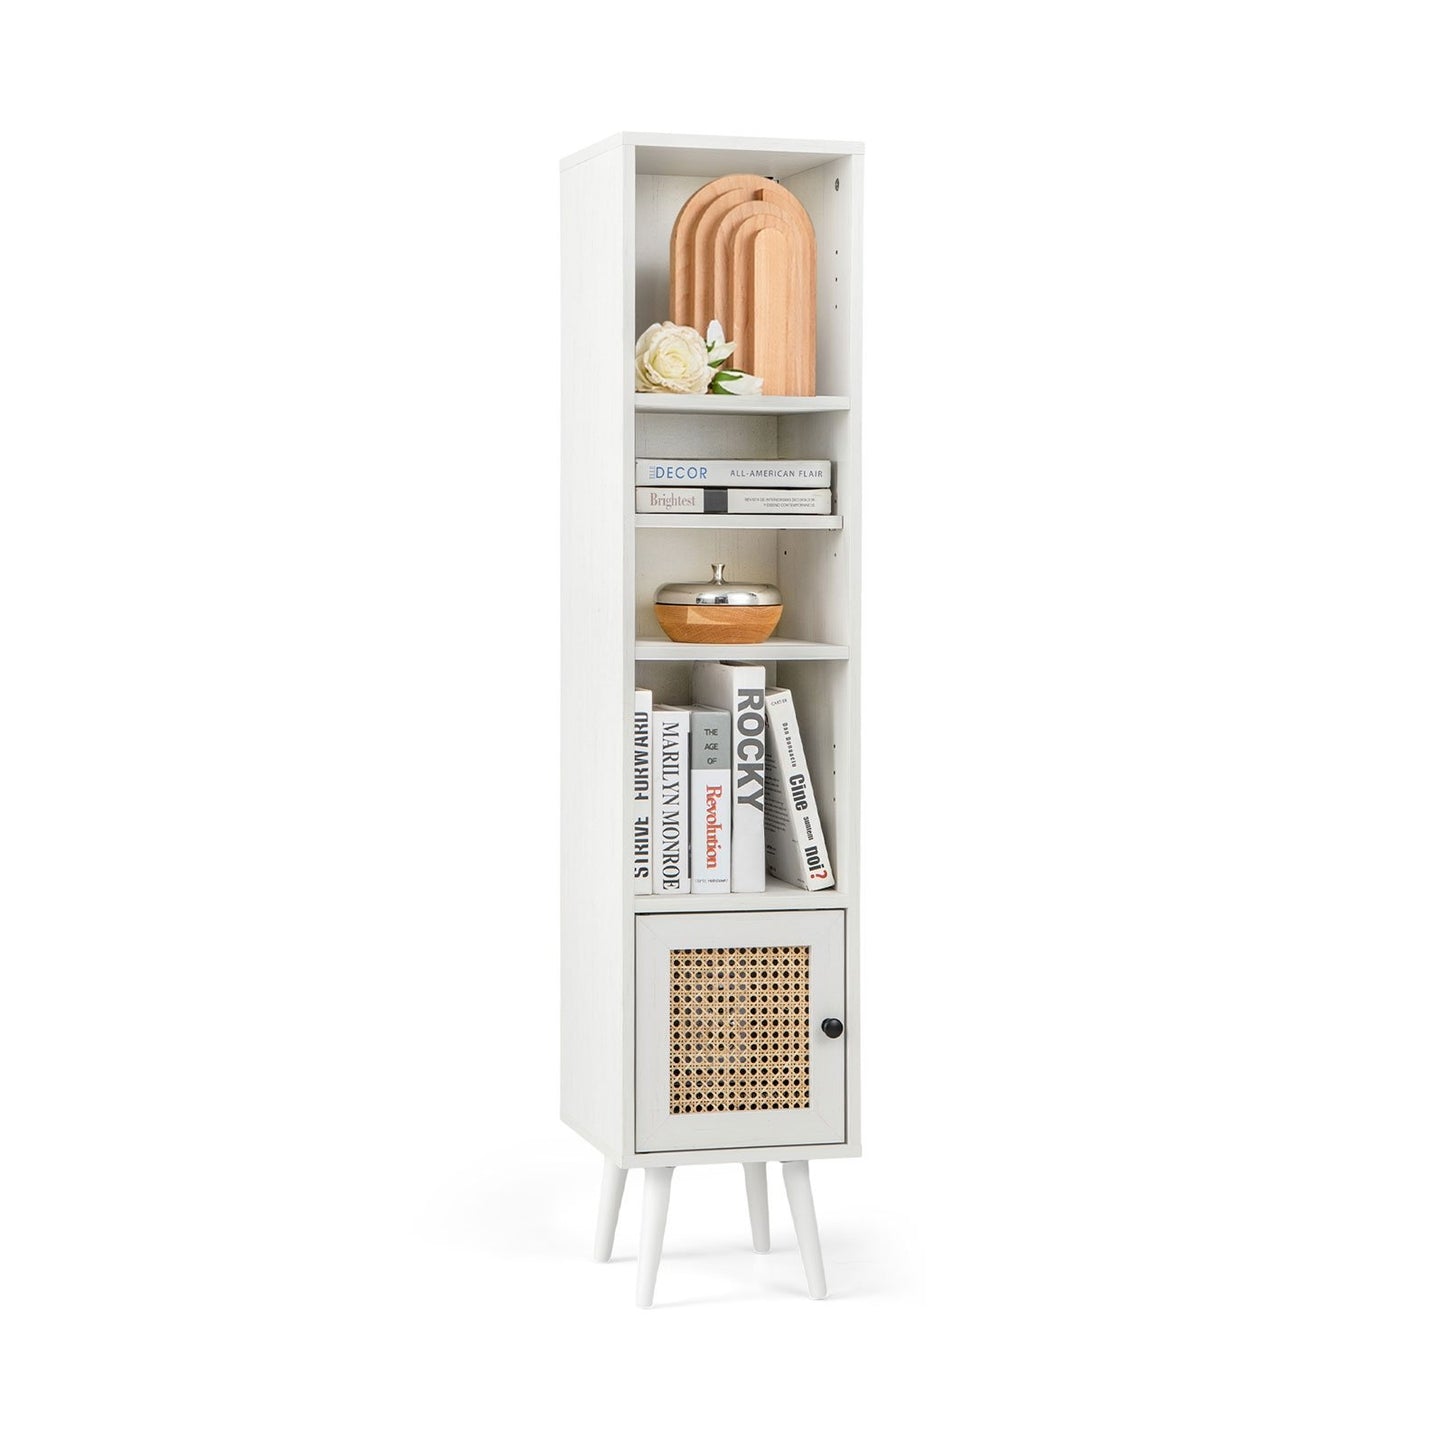 4 Tiers Rattan Storage Cabinet with Slim Design, White